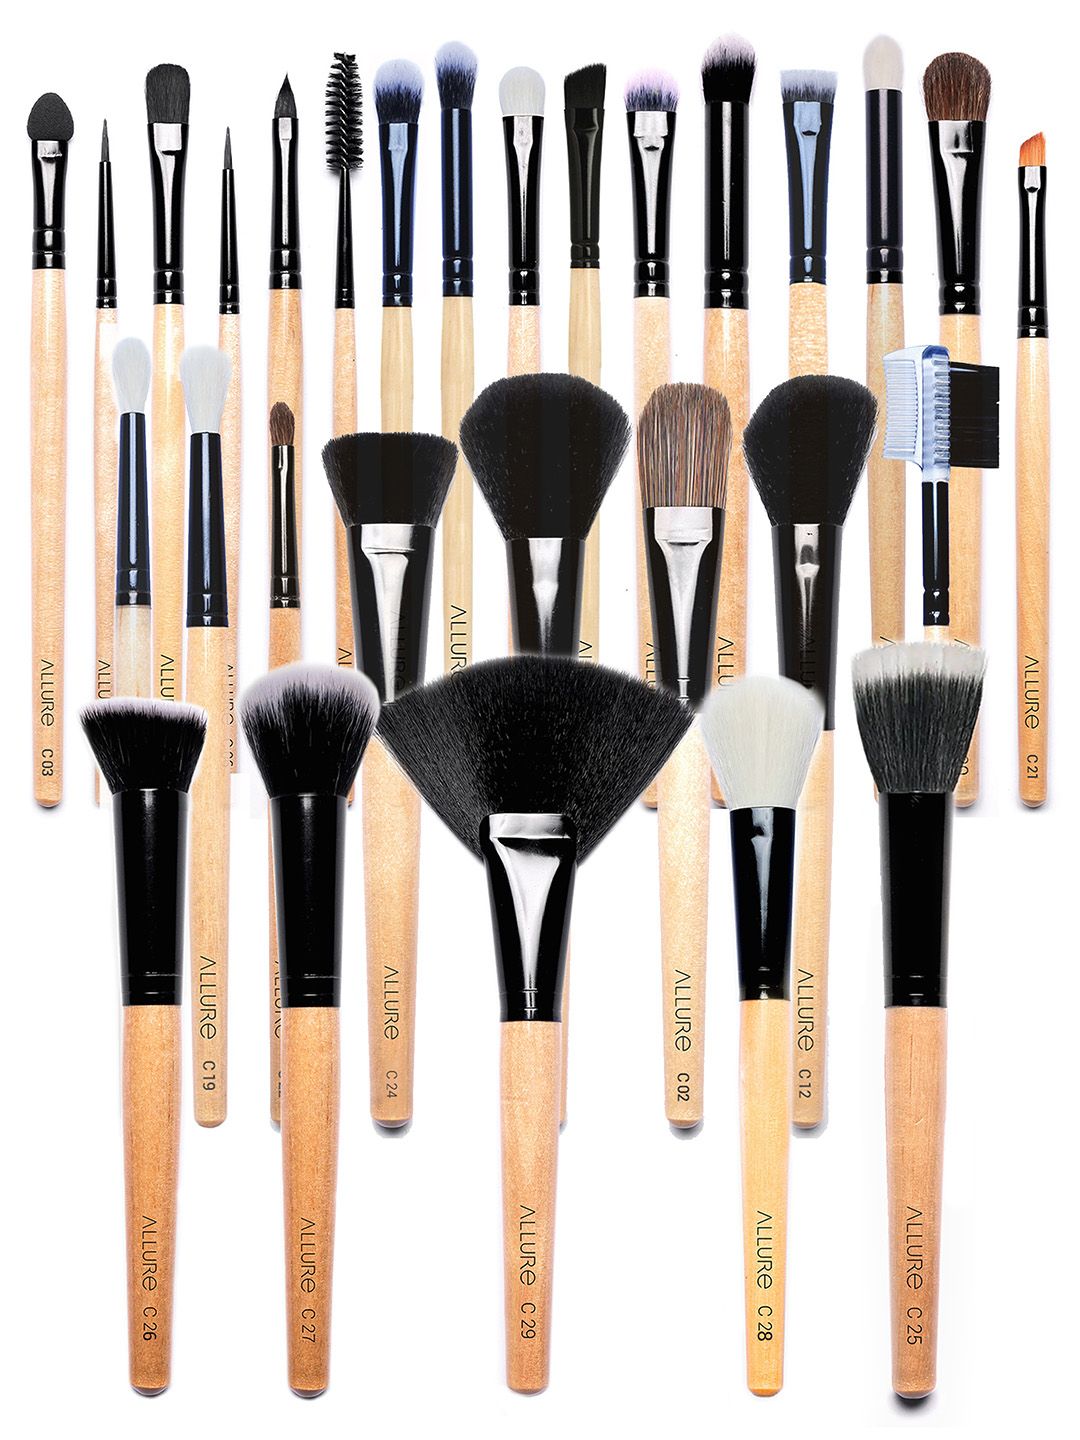 ALLURE Set Of 29 Makeup Brush Set Price in India